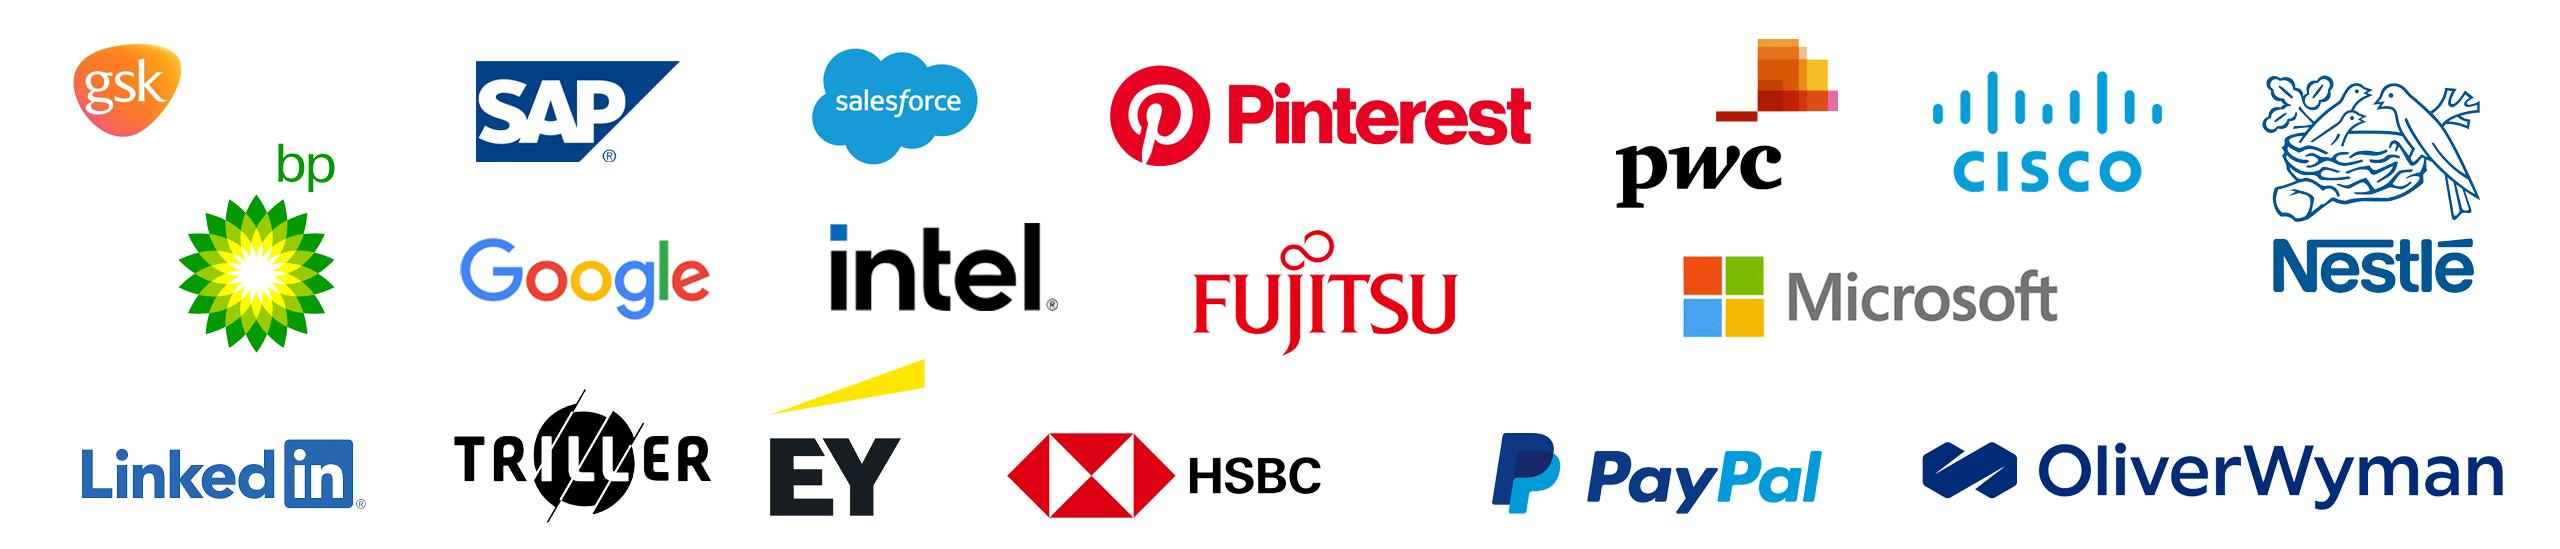 Corporate Speaker Agency Client Logos